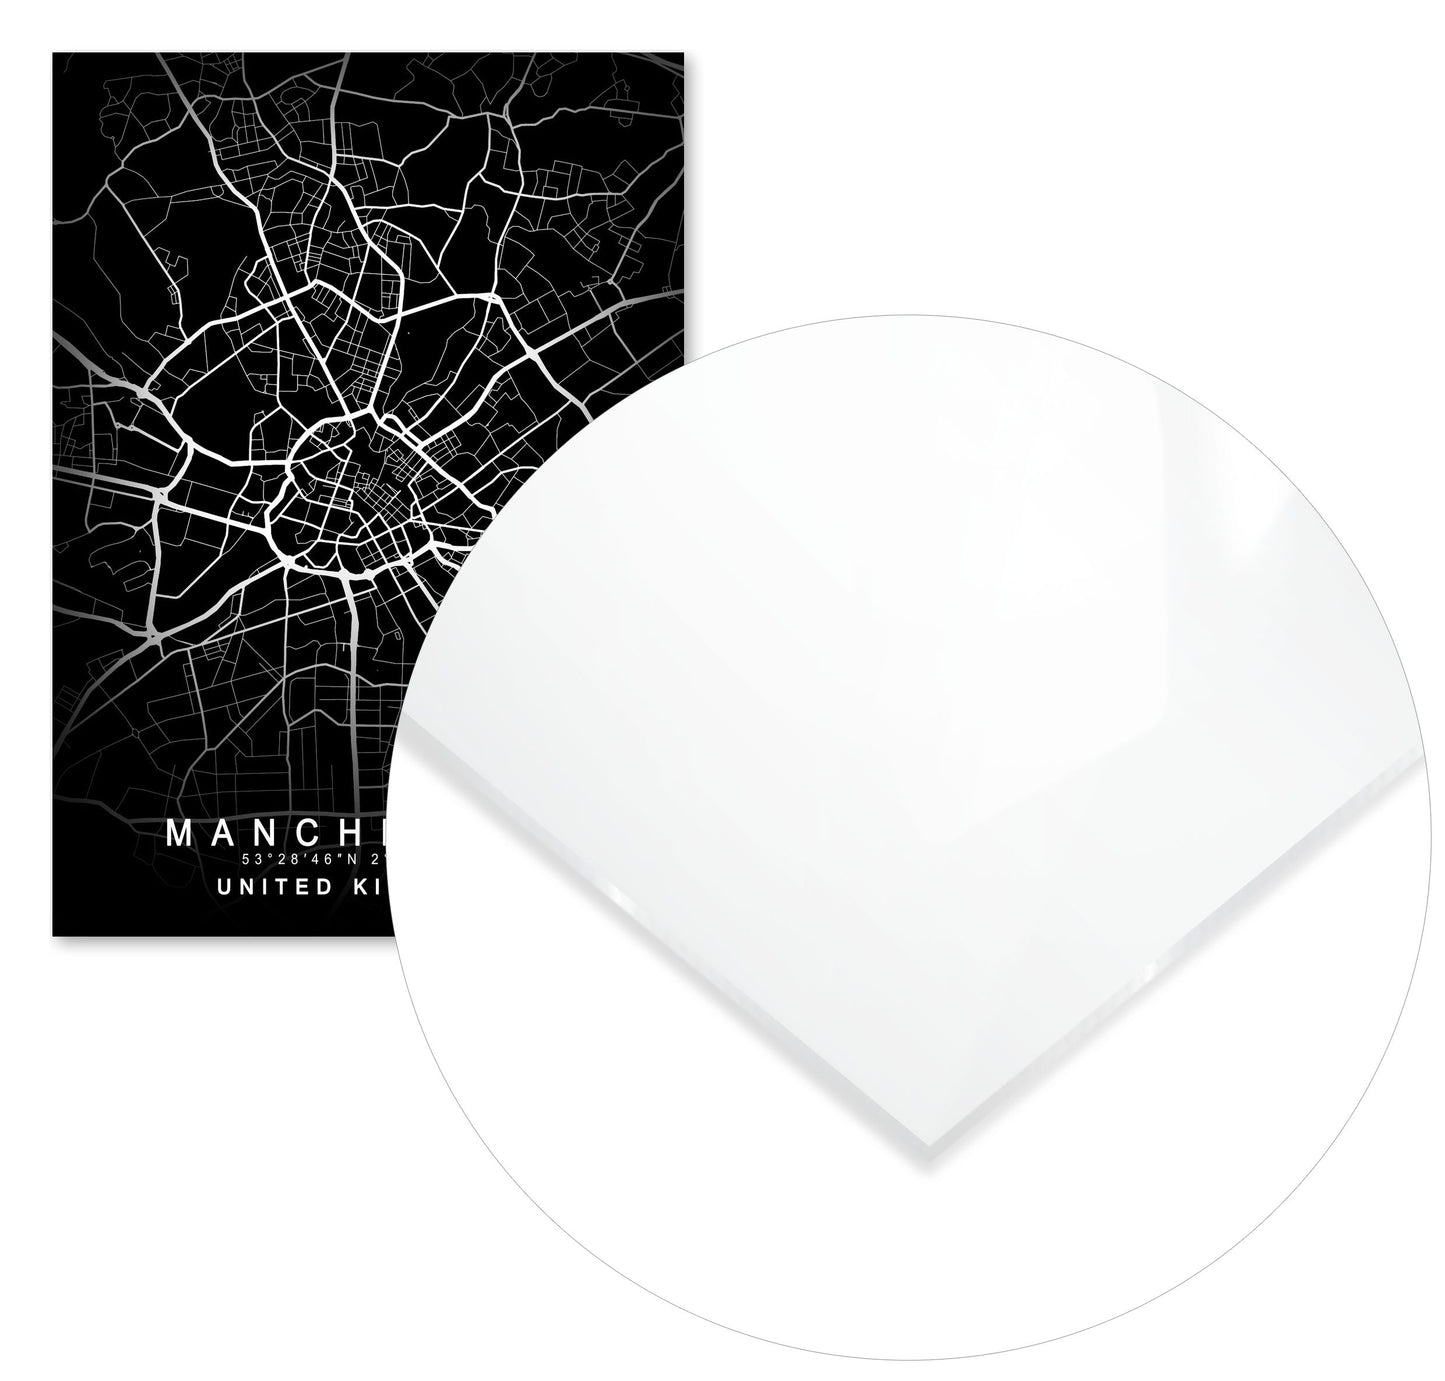 Manchester Map Black - @GreyArt